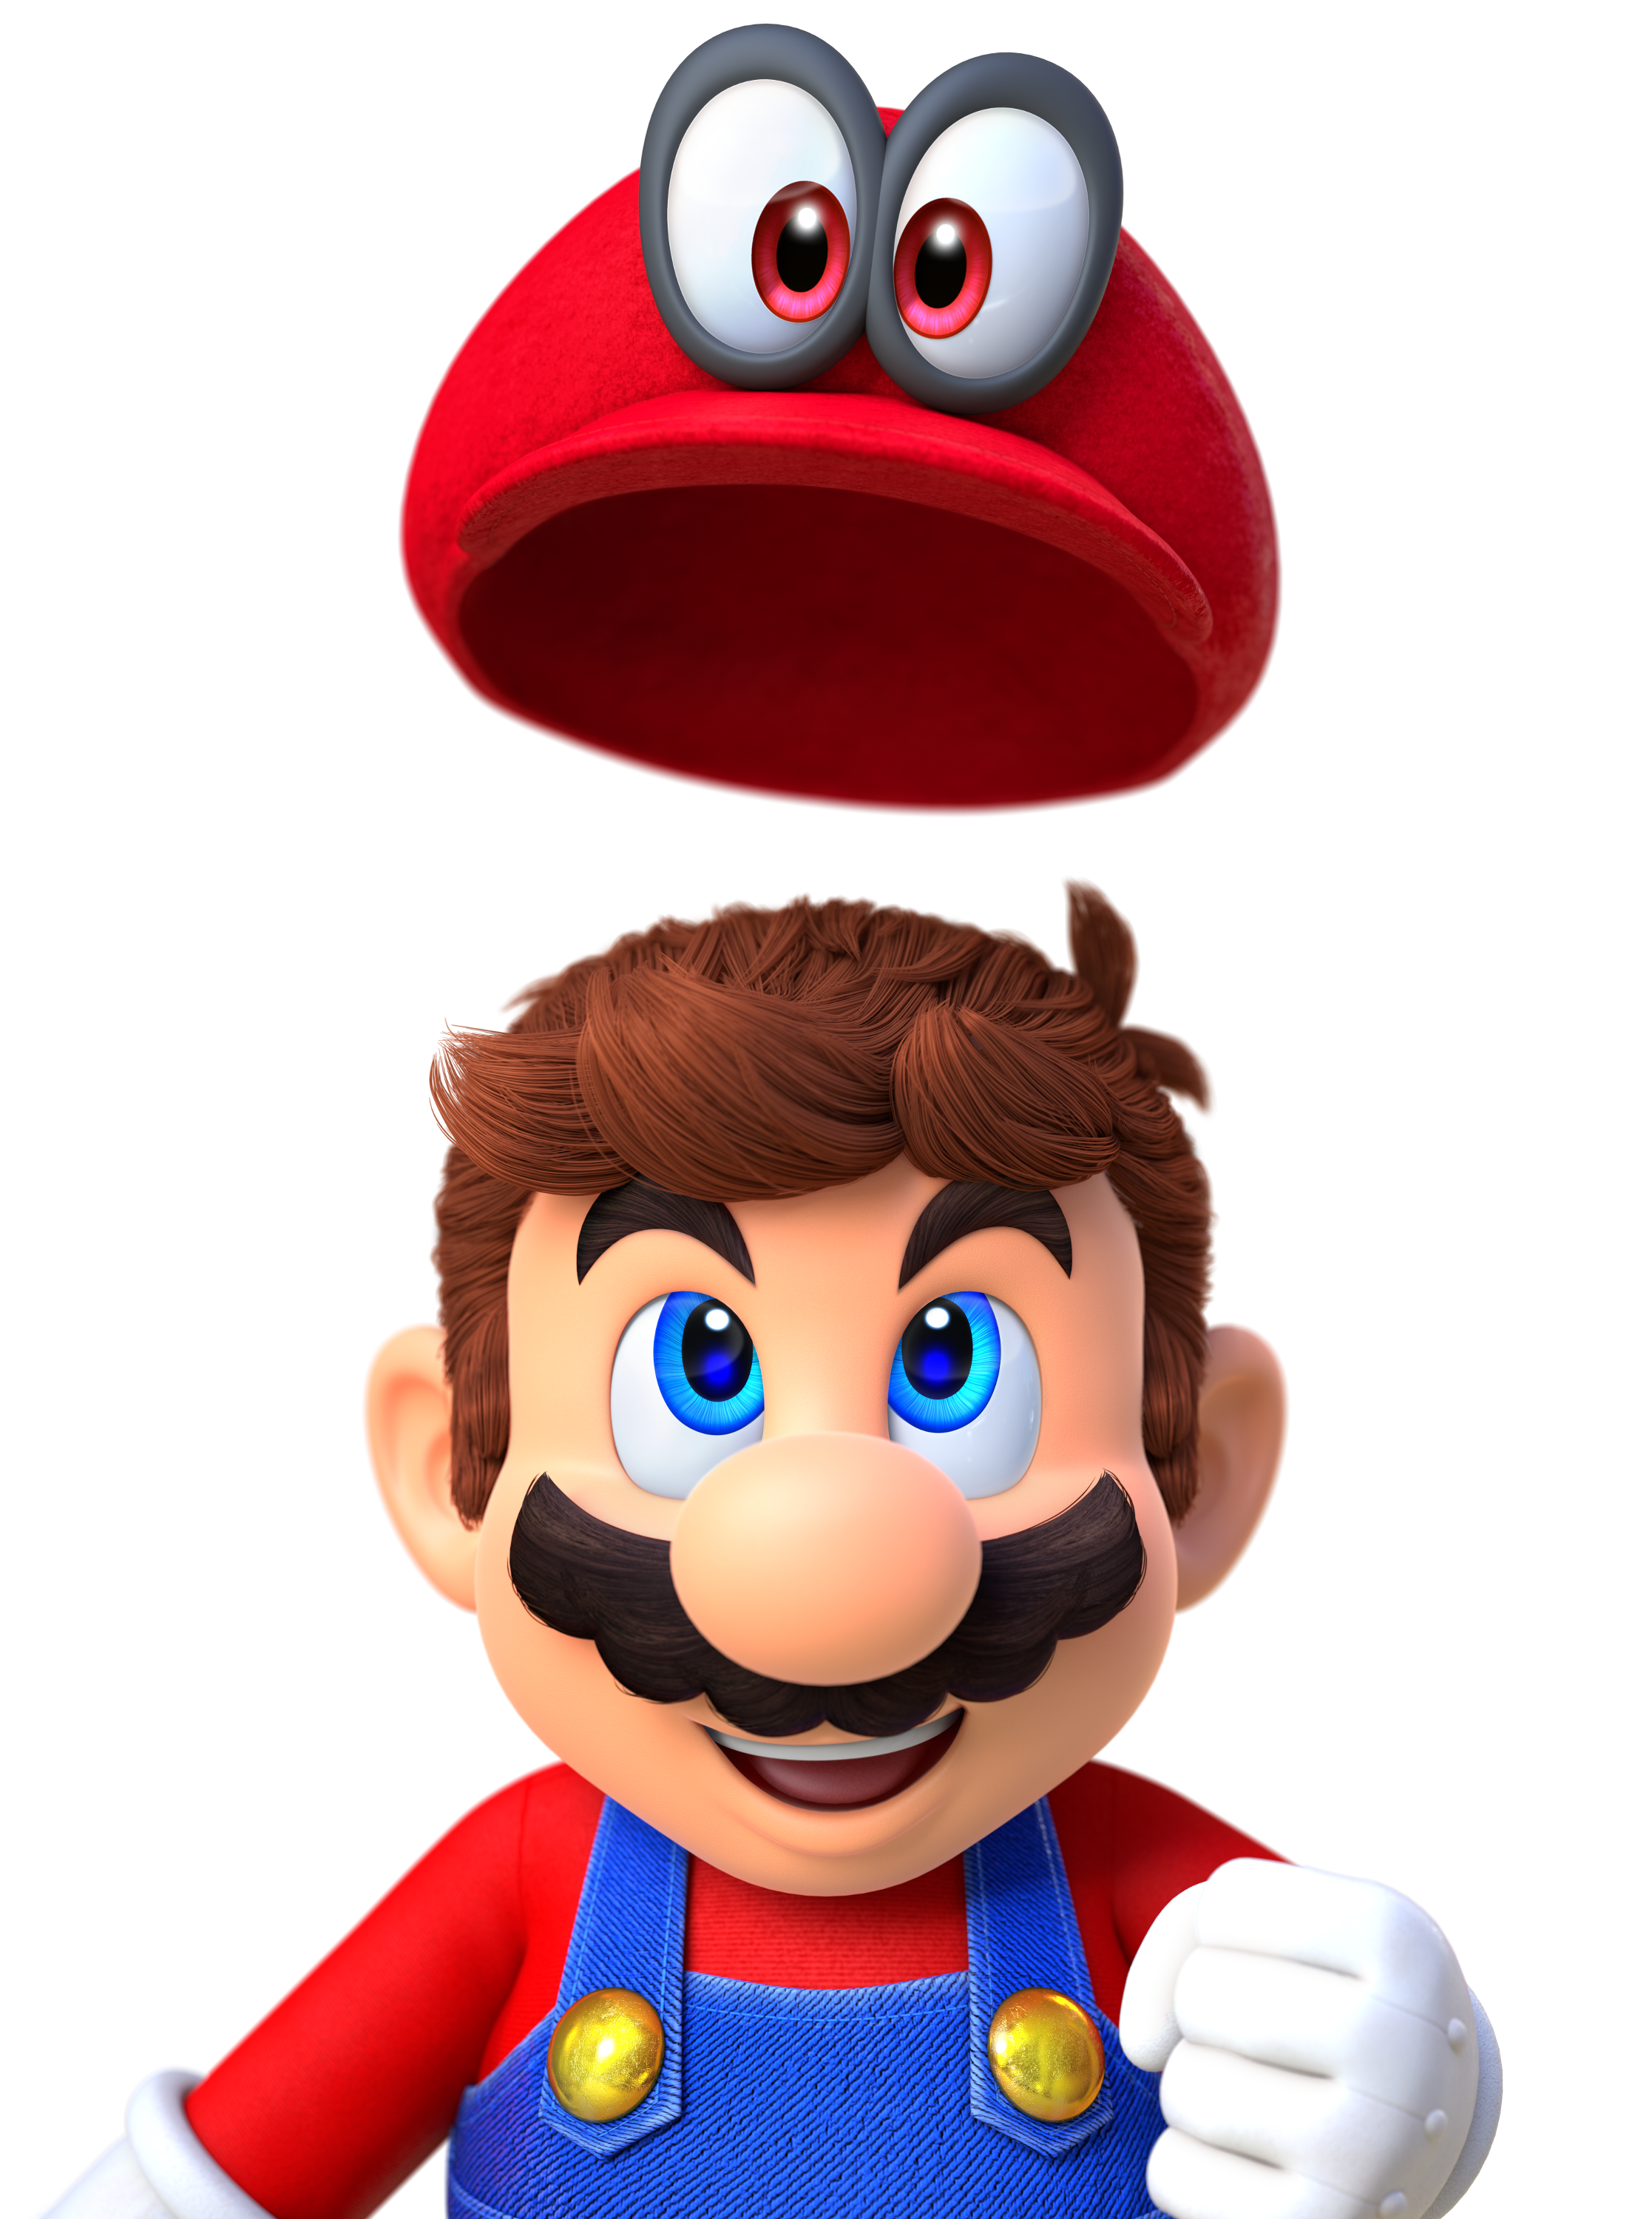 Artwork of Mario, from Super Mario Odyssey.